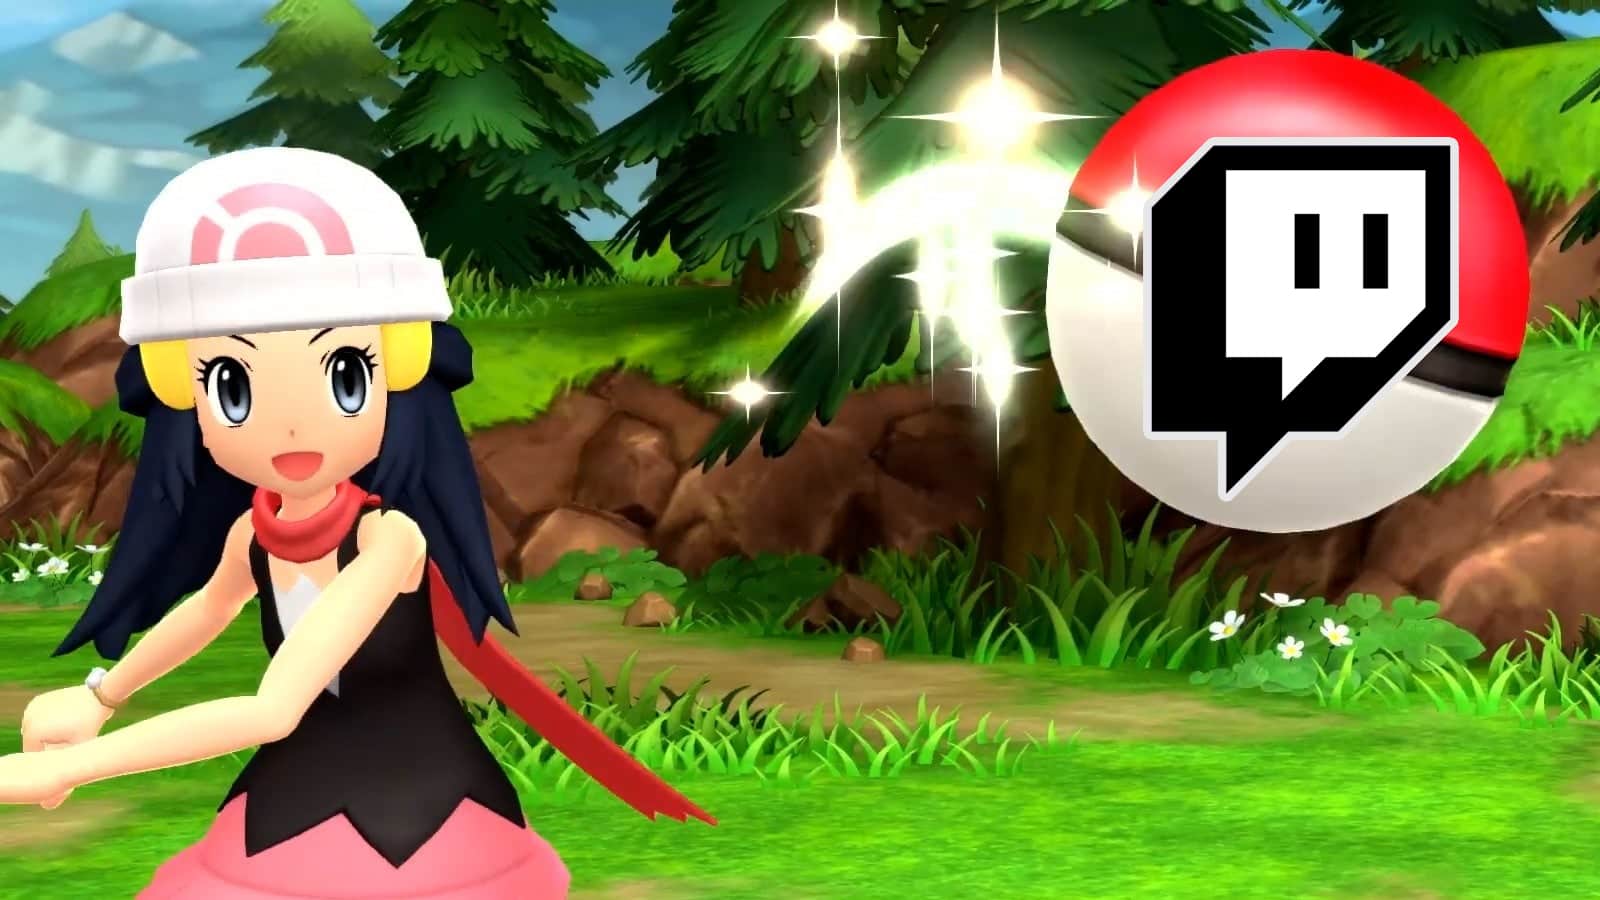 Pokémon Brilliant Diamond/Shining Pearl - Twitch